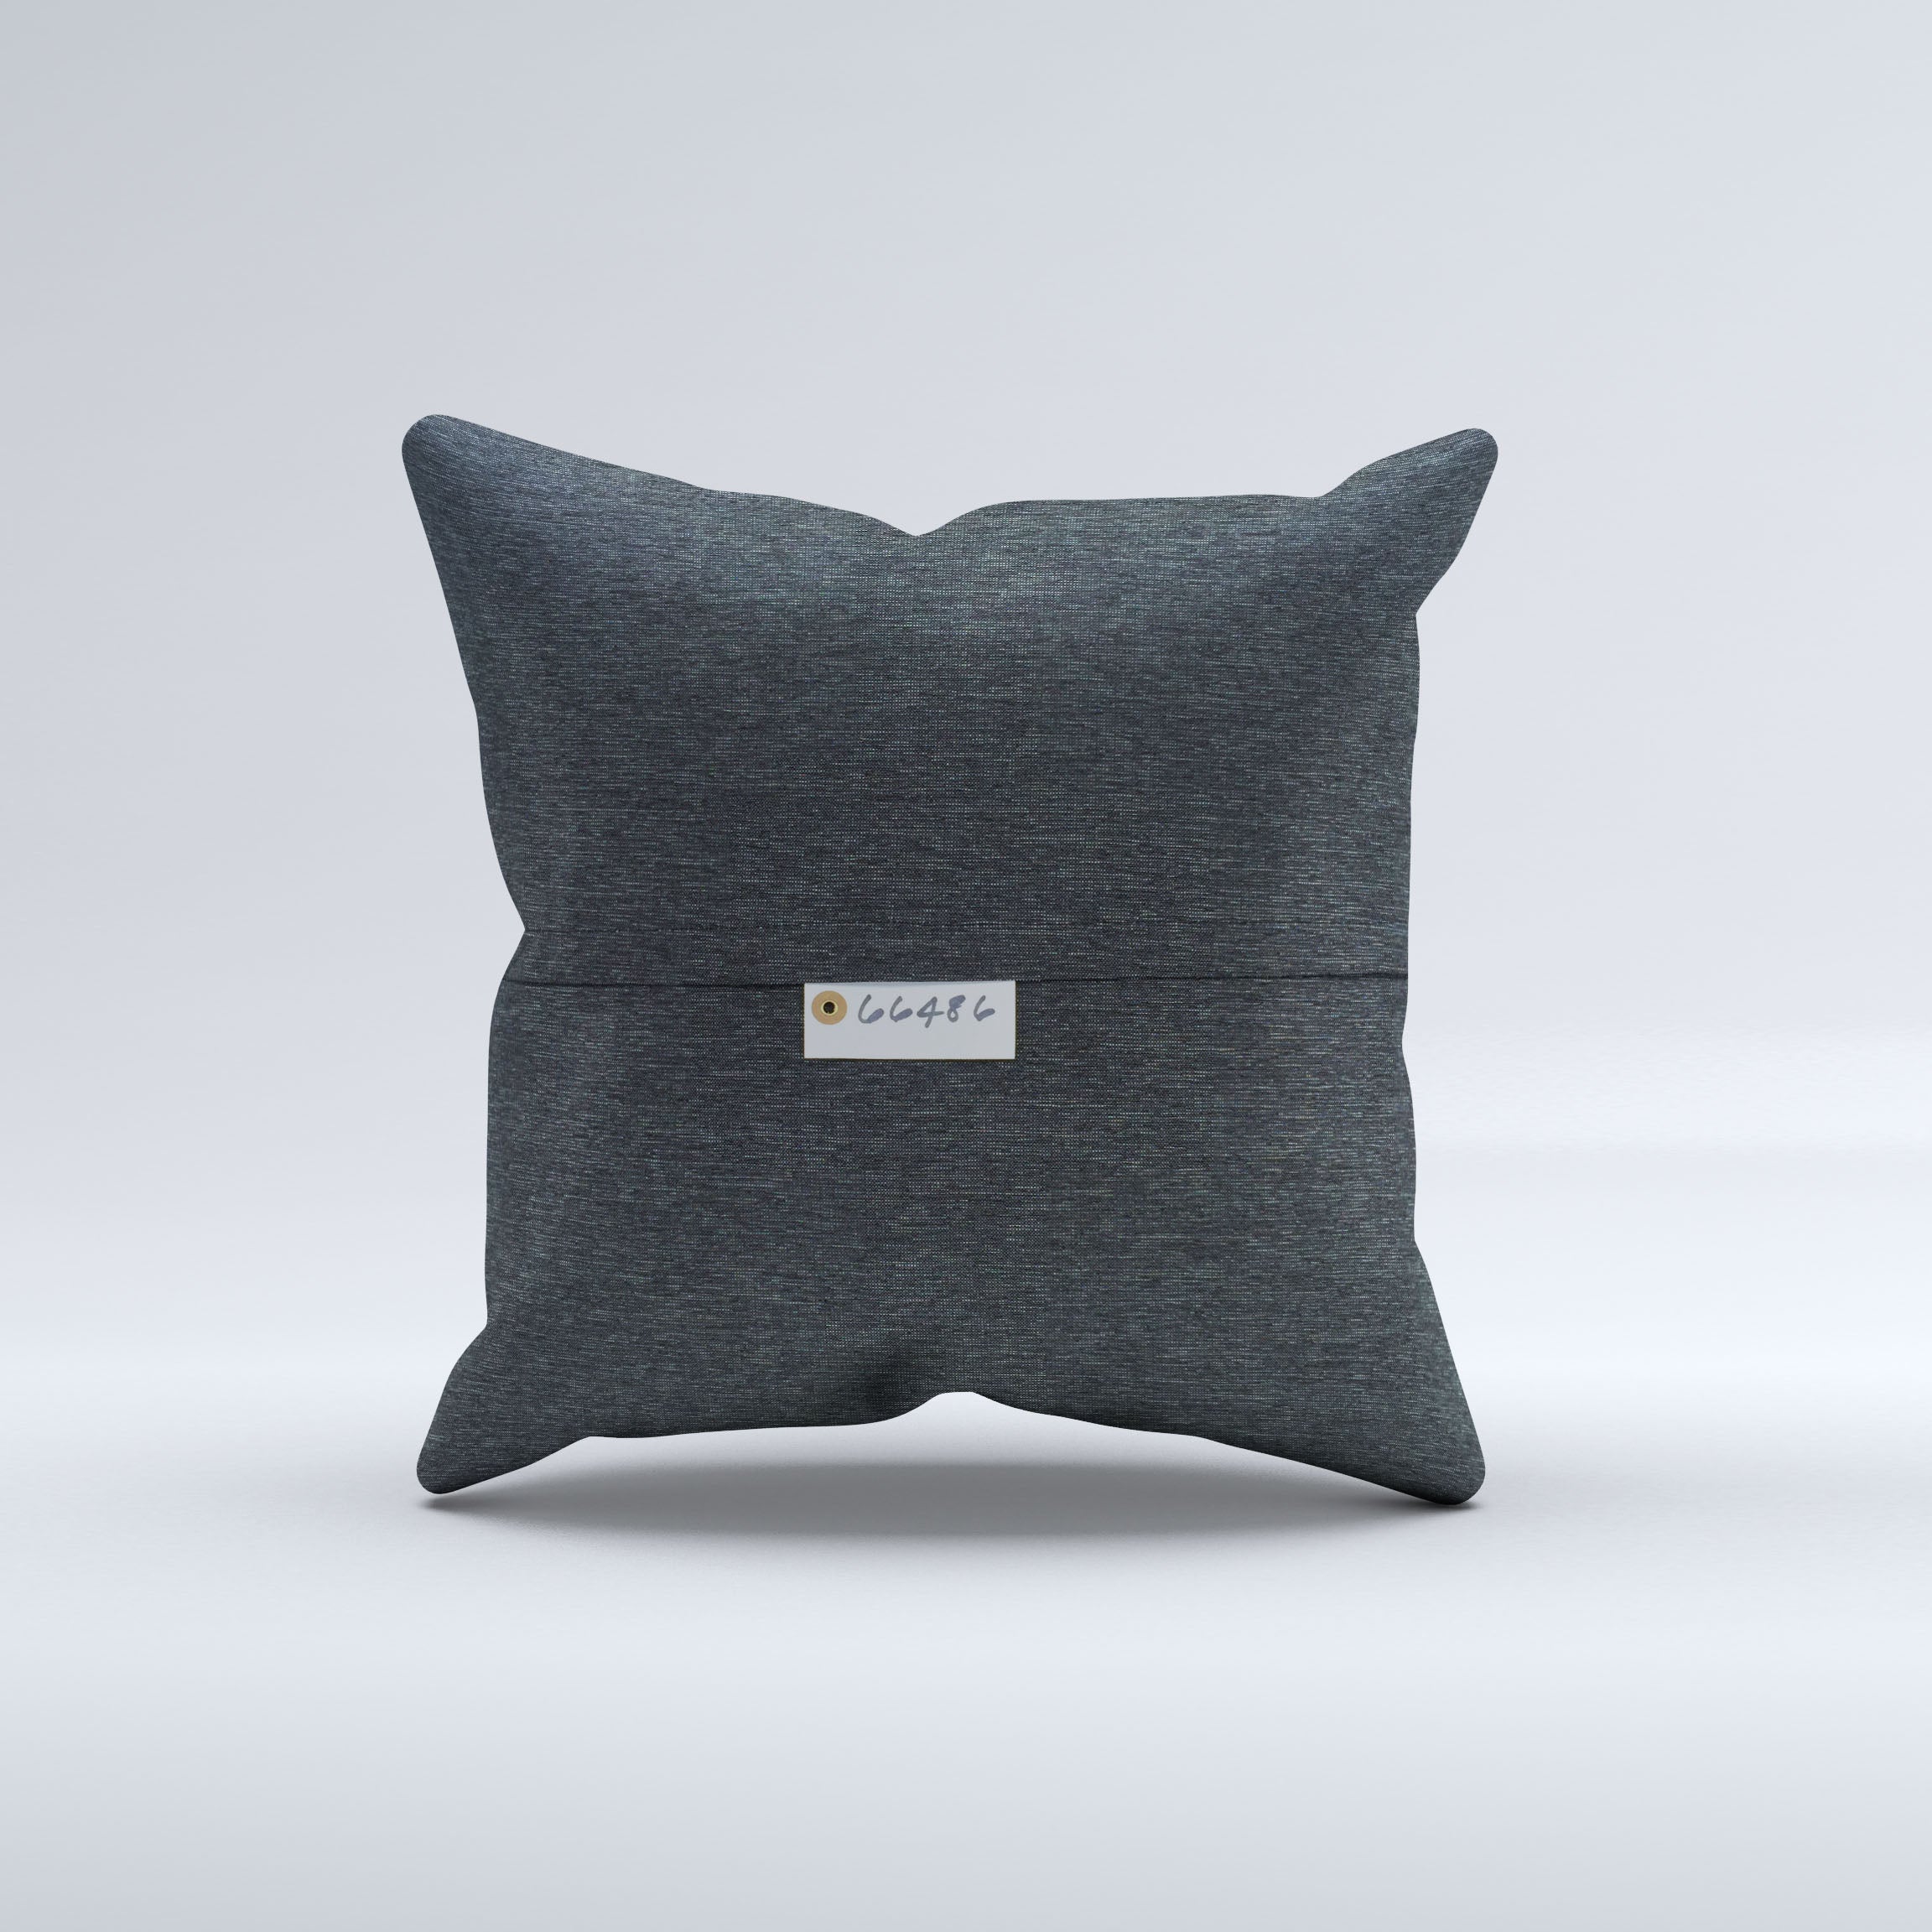 Vintage Turkish Kilim Cushion Cover 60x60 cm Square Wool Large Pillowcase 66486